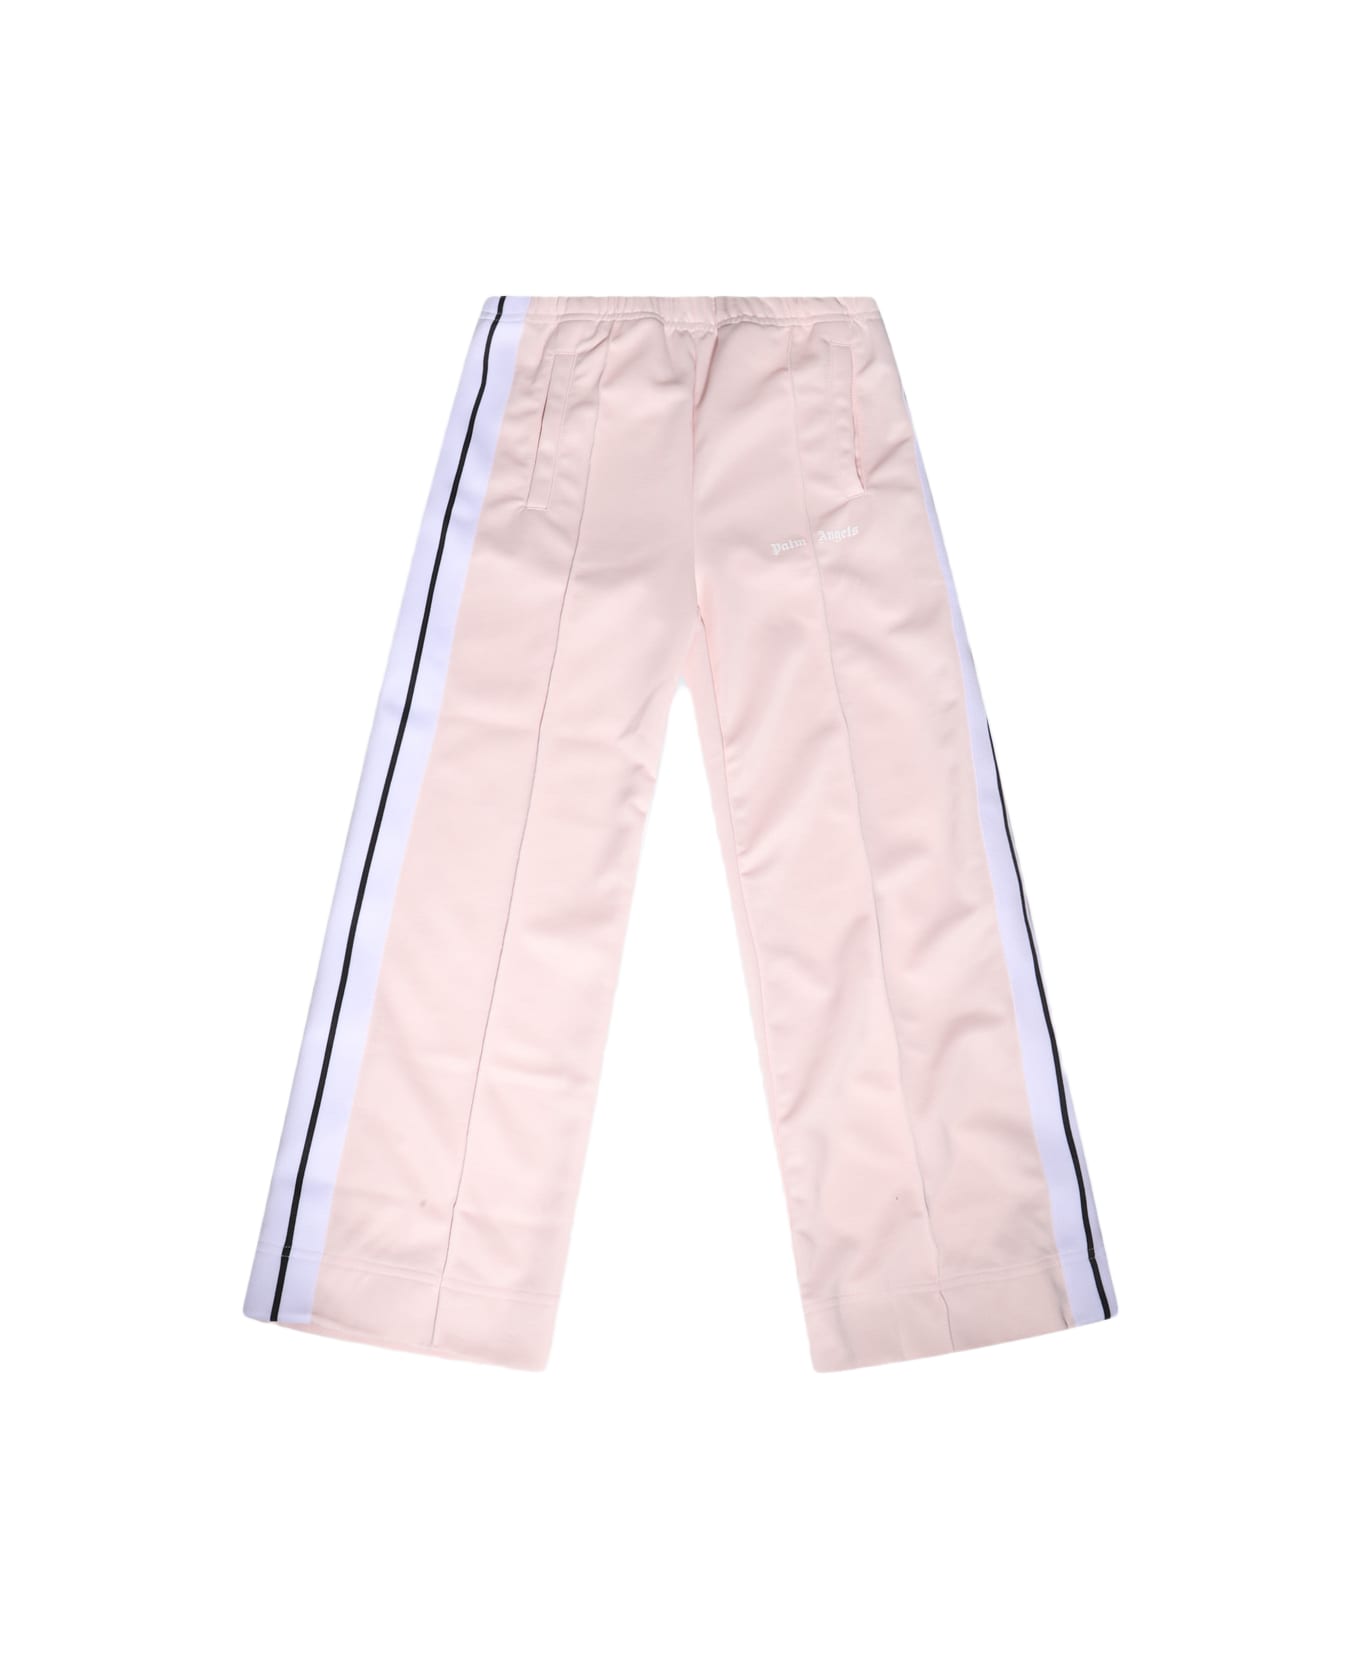 Palm Angels Light Pink Cotton Pants - LIGHT PINK ボトムス